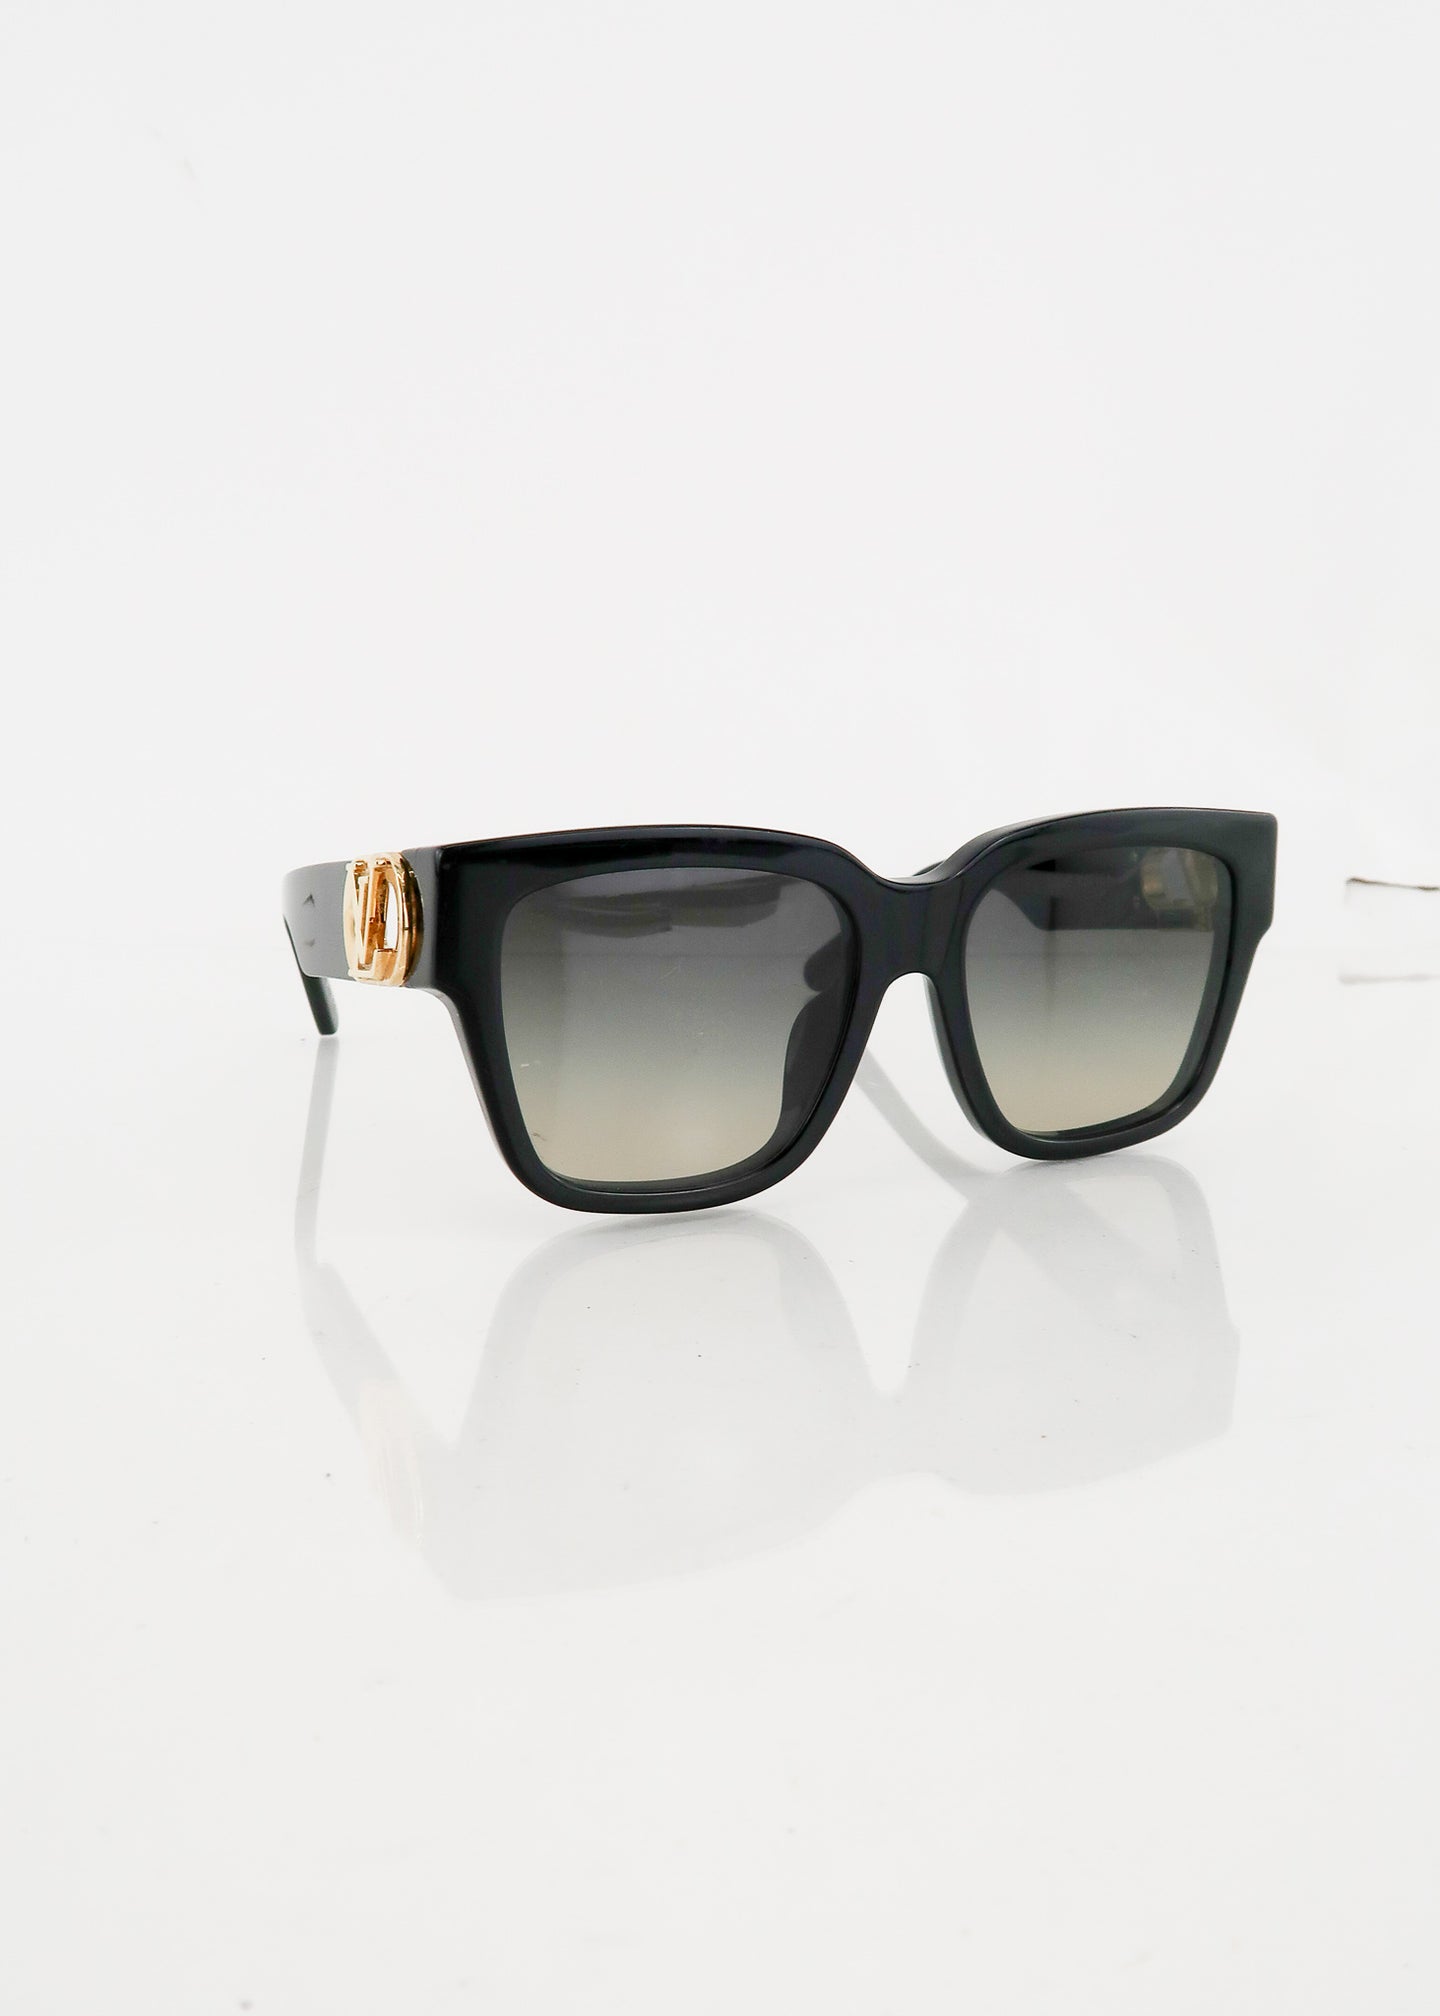 Aaa Louis Vuitton Sunglasses,Louis Vuitton Designer Sunglasses